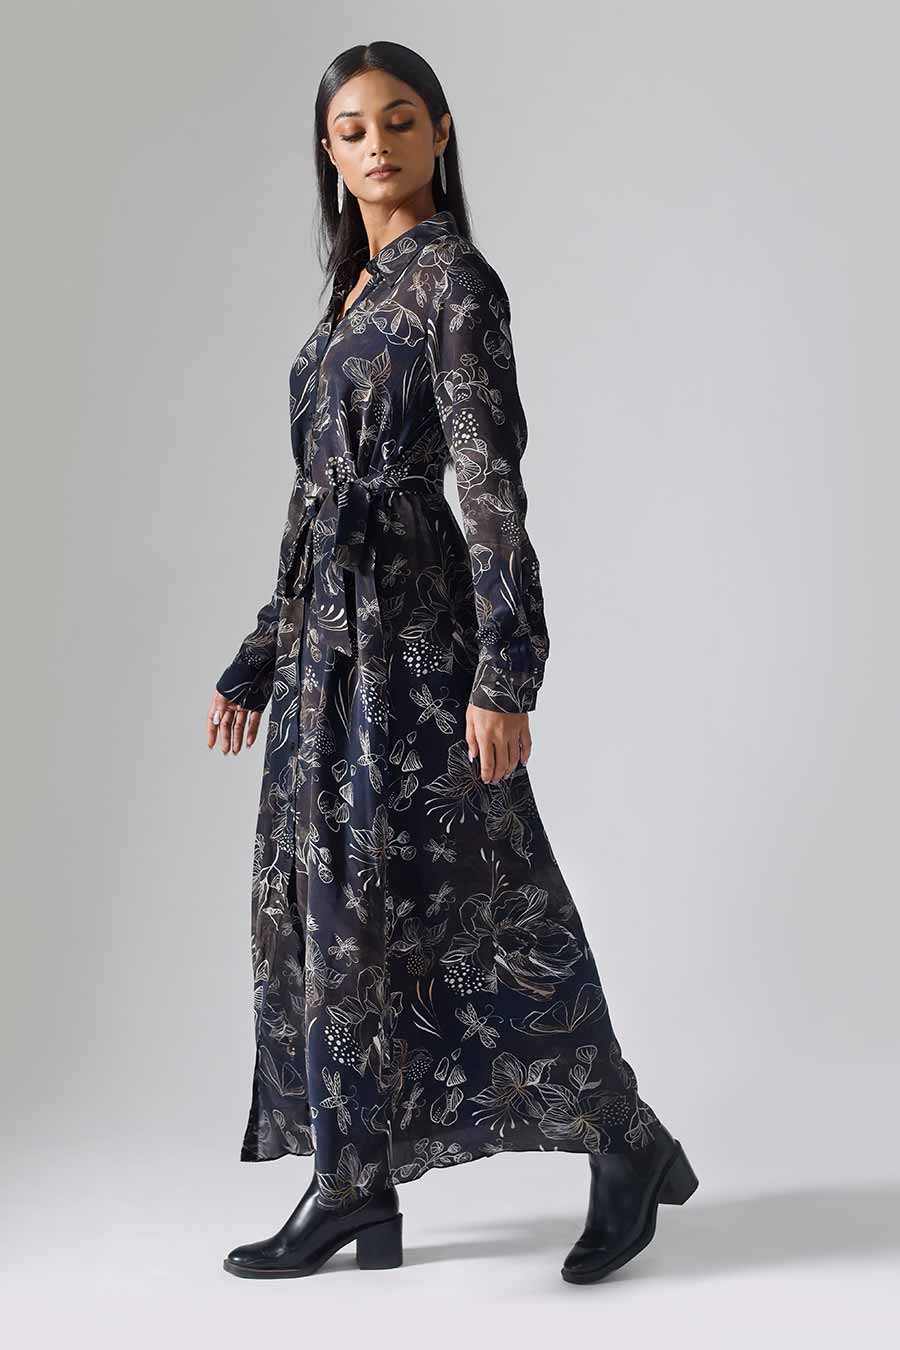 Marbled Black Printed Reverie Long Dress